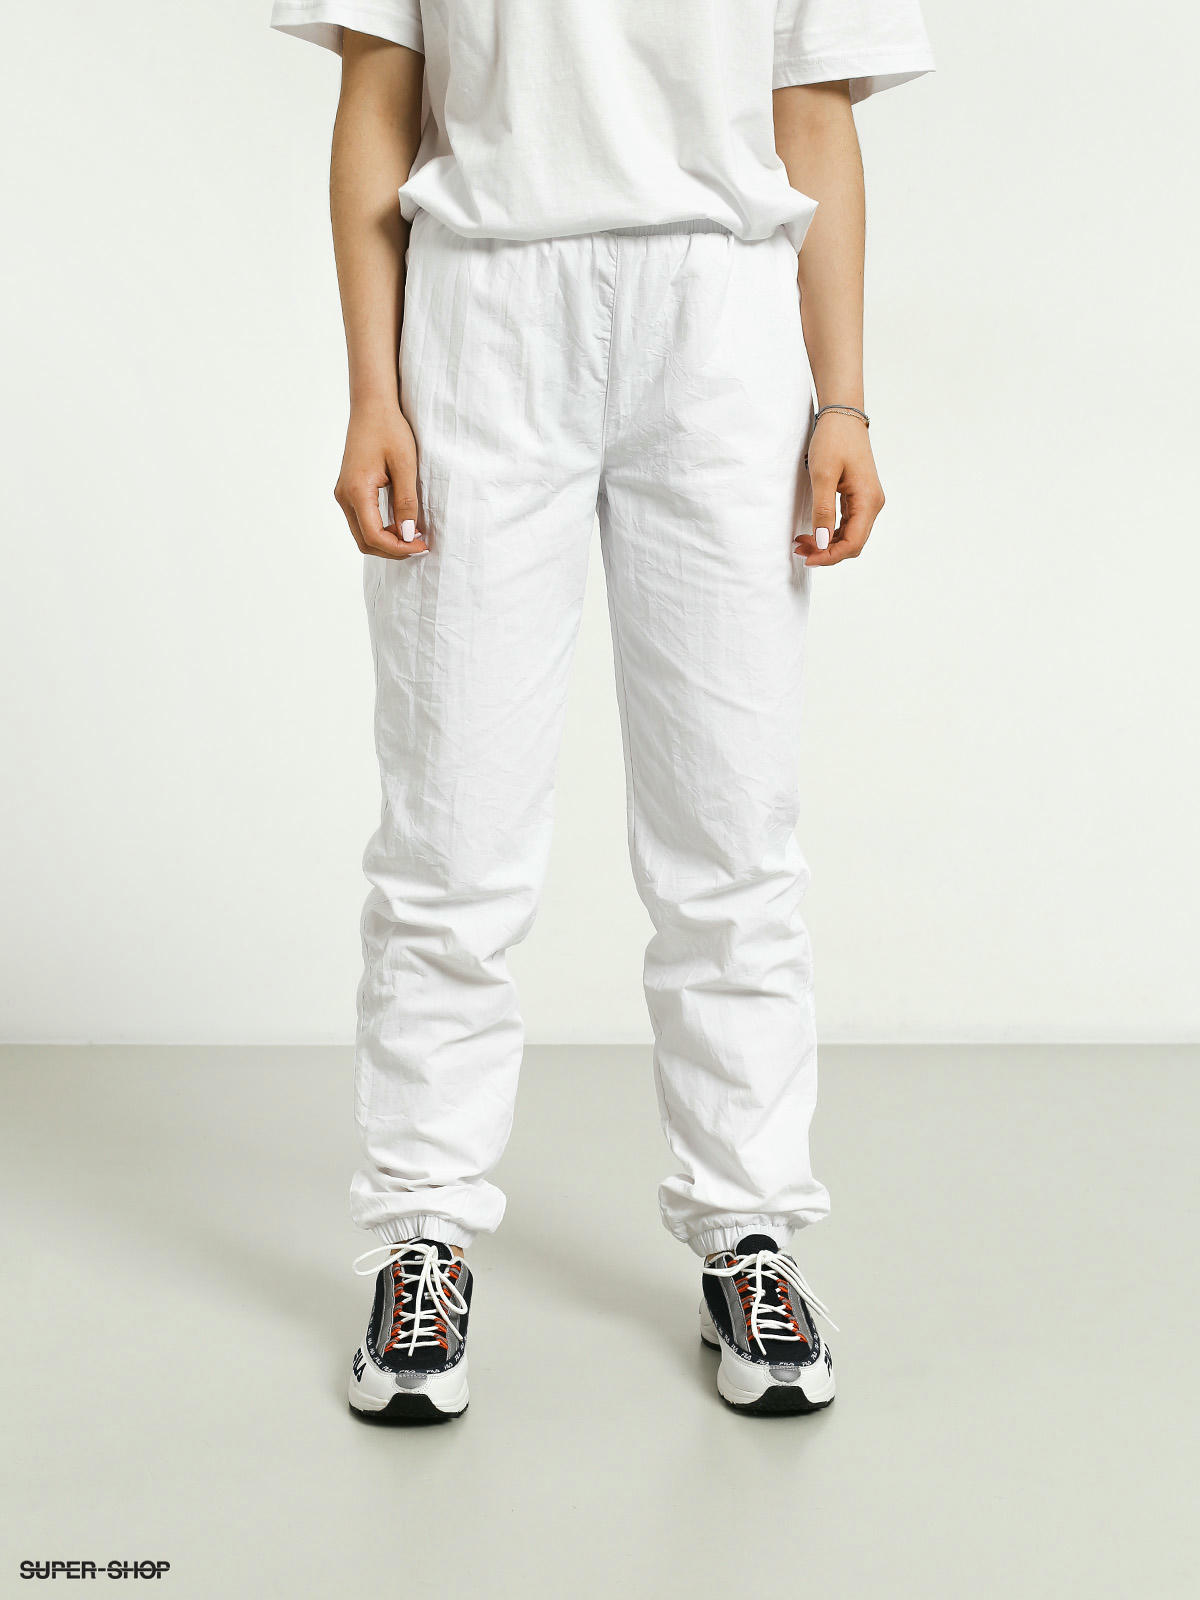 Fila Cargo Pants Khaki Color Size-42 Zip Up Pockets Logo Polyester Trousers  | eBay